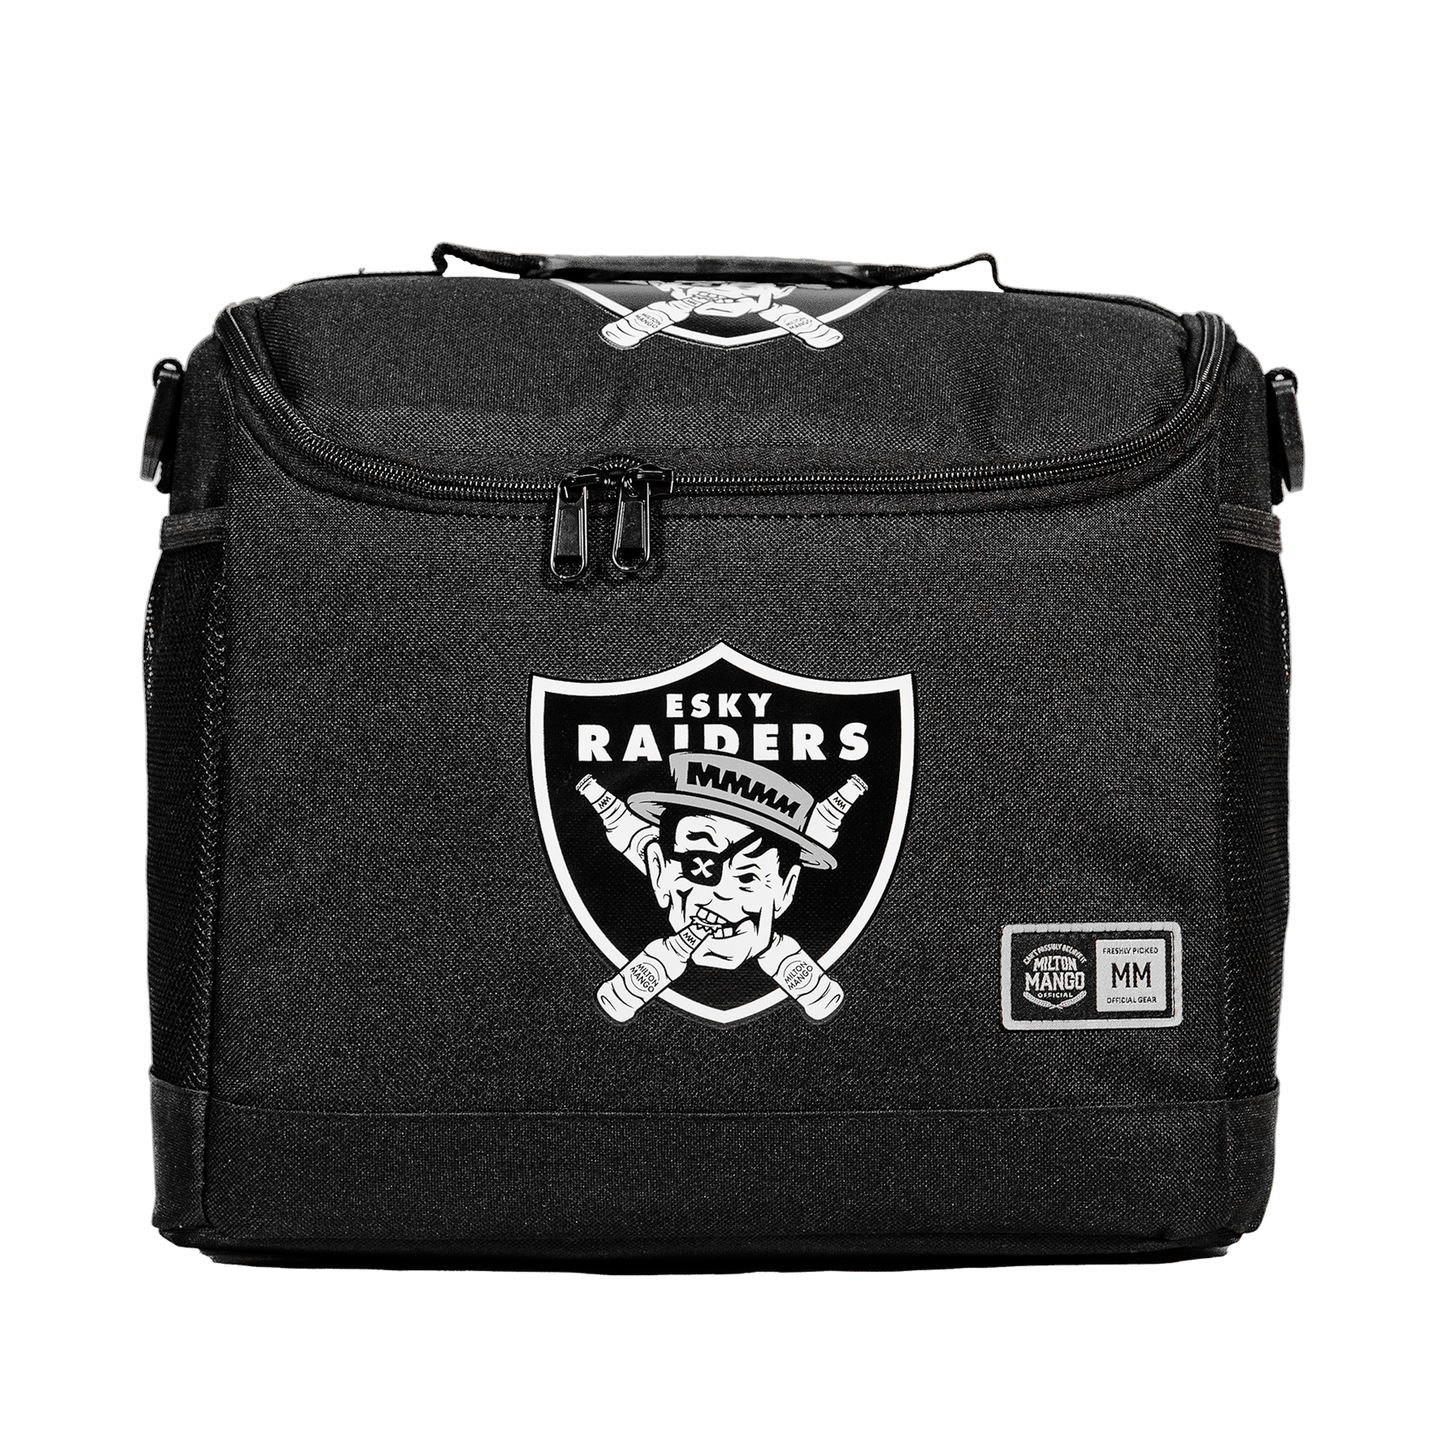 Esky Raiders Cooler Bag